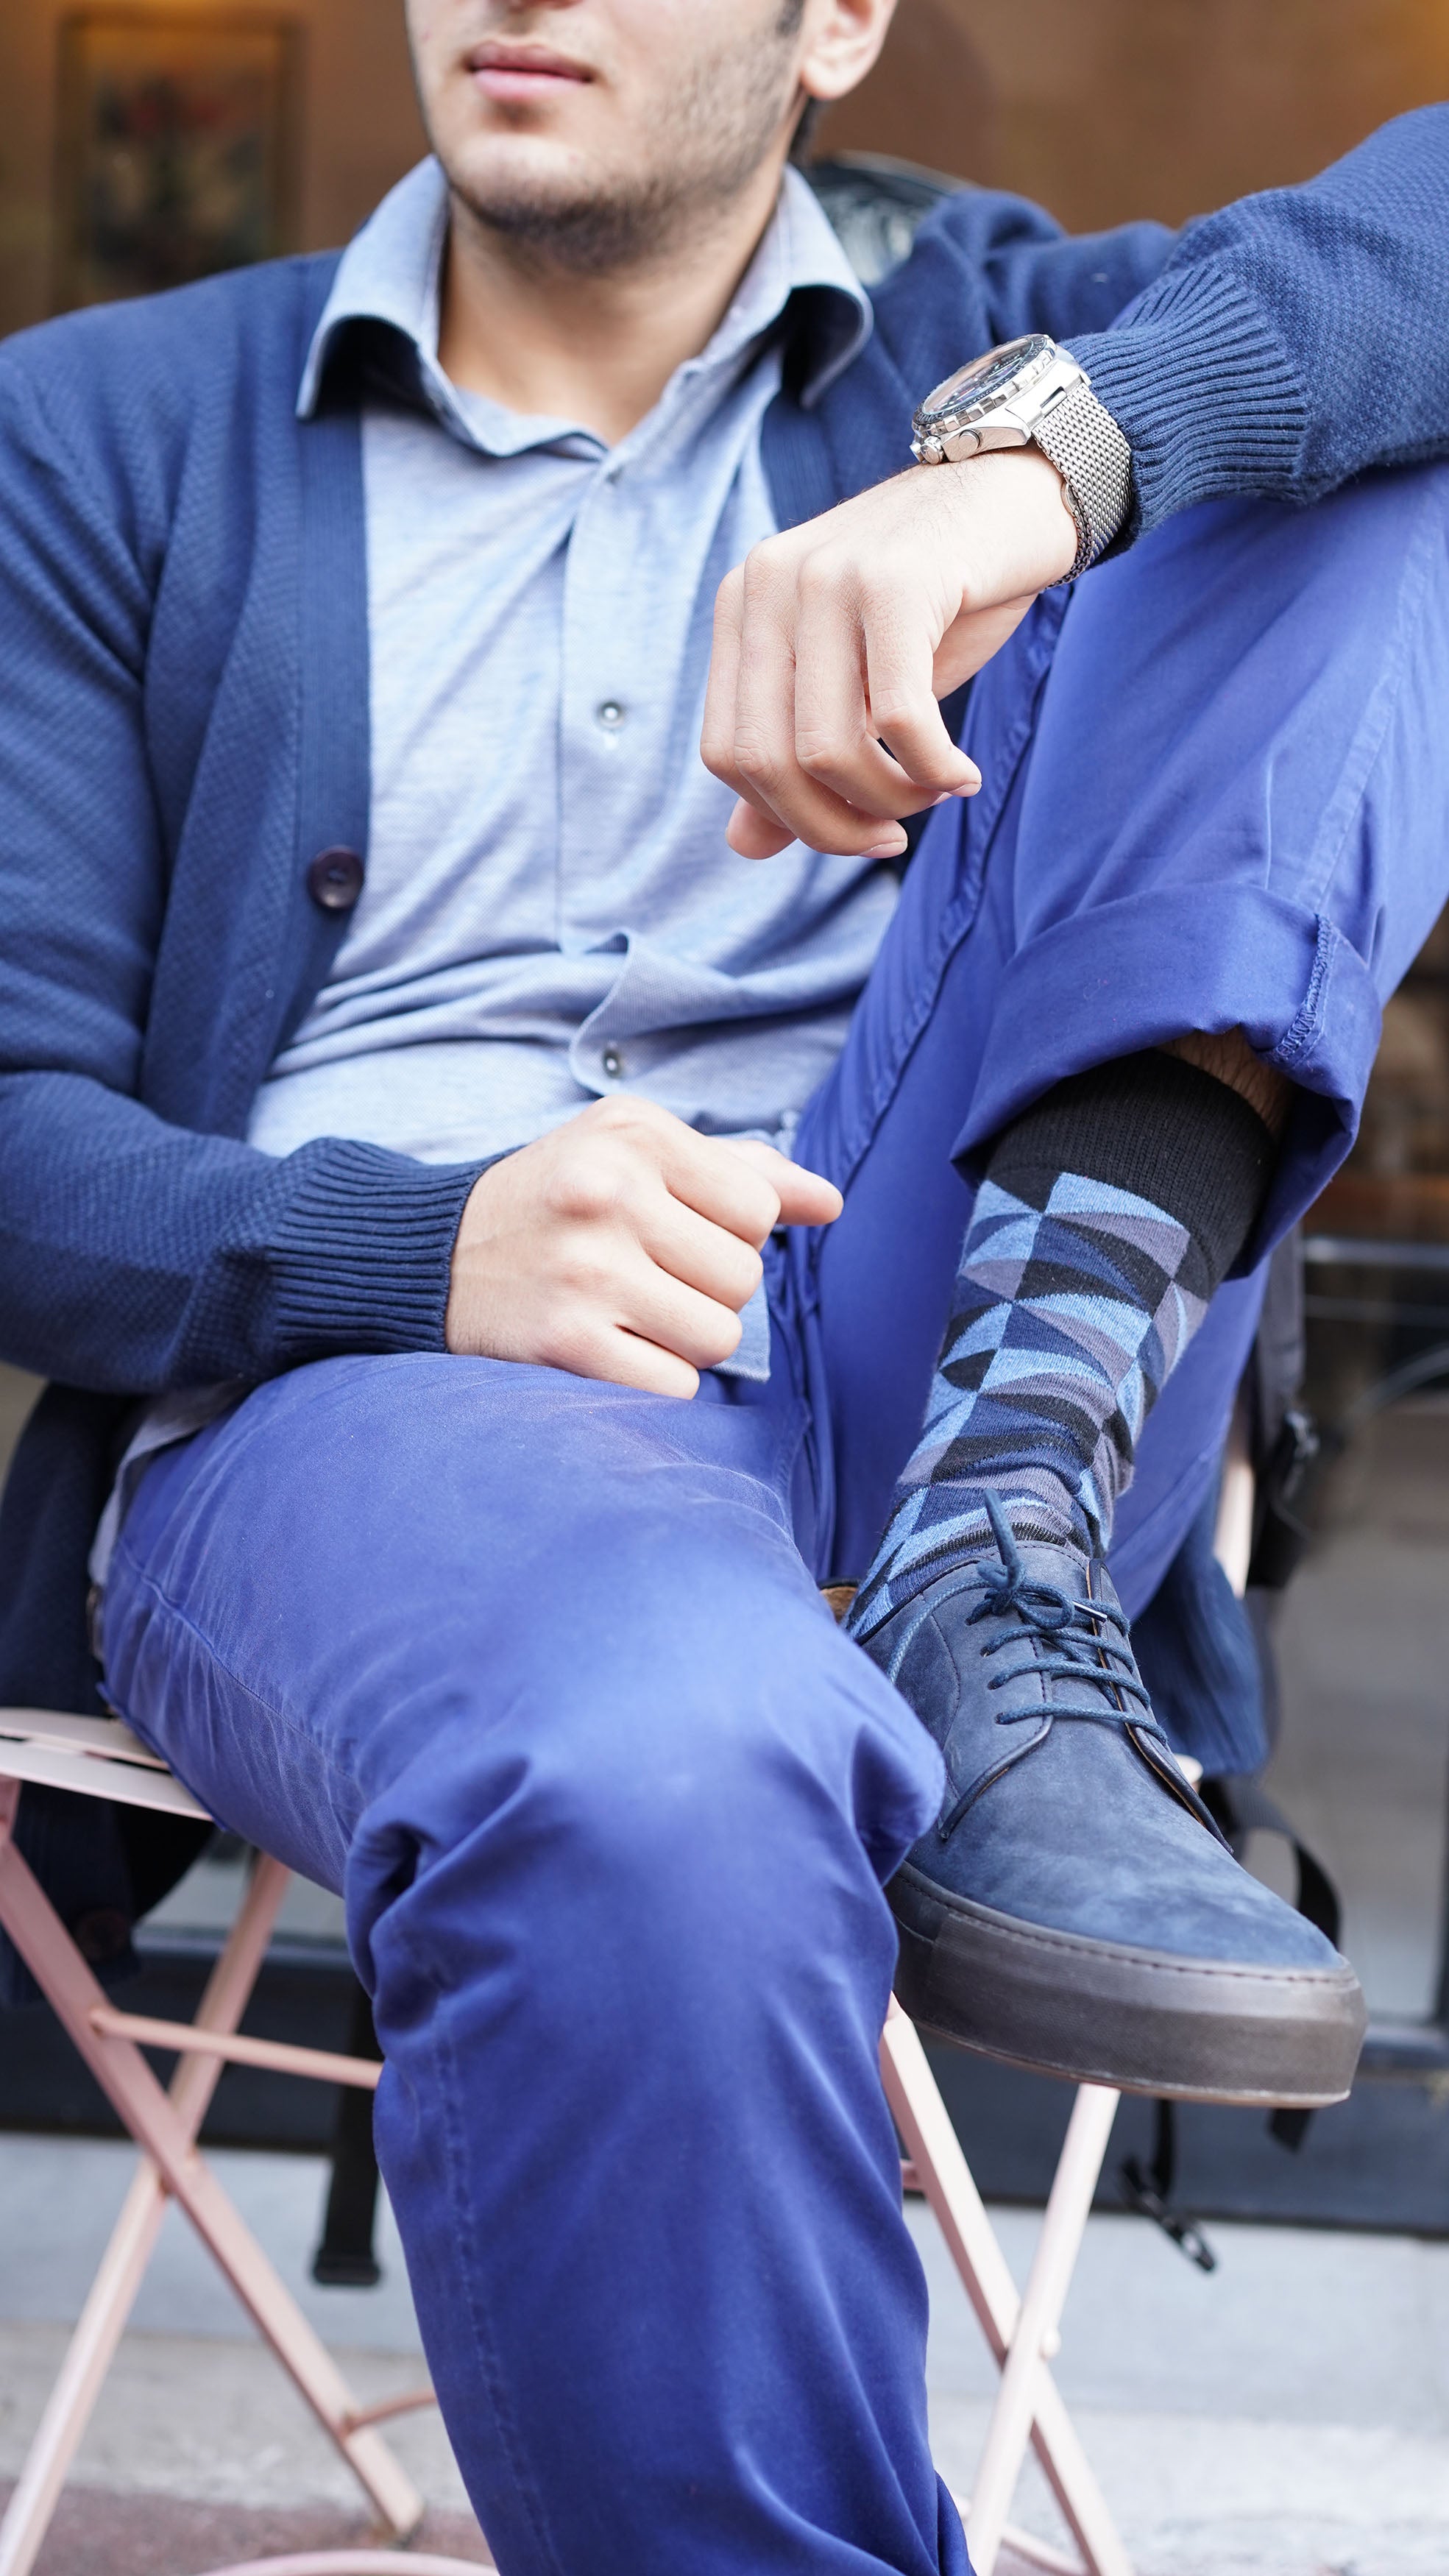 Men's Azure Mix Set Socks